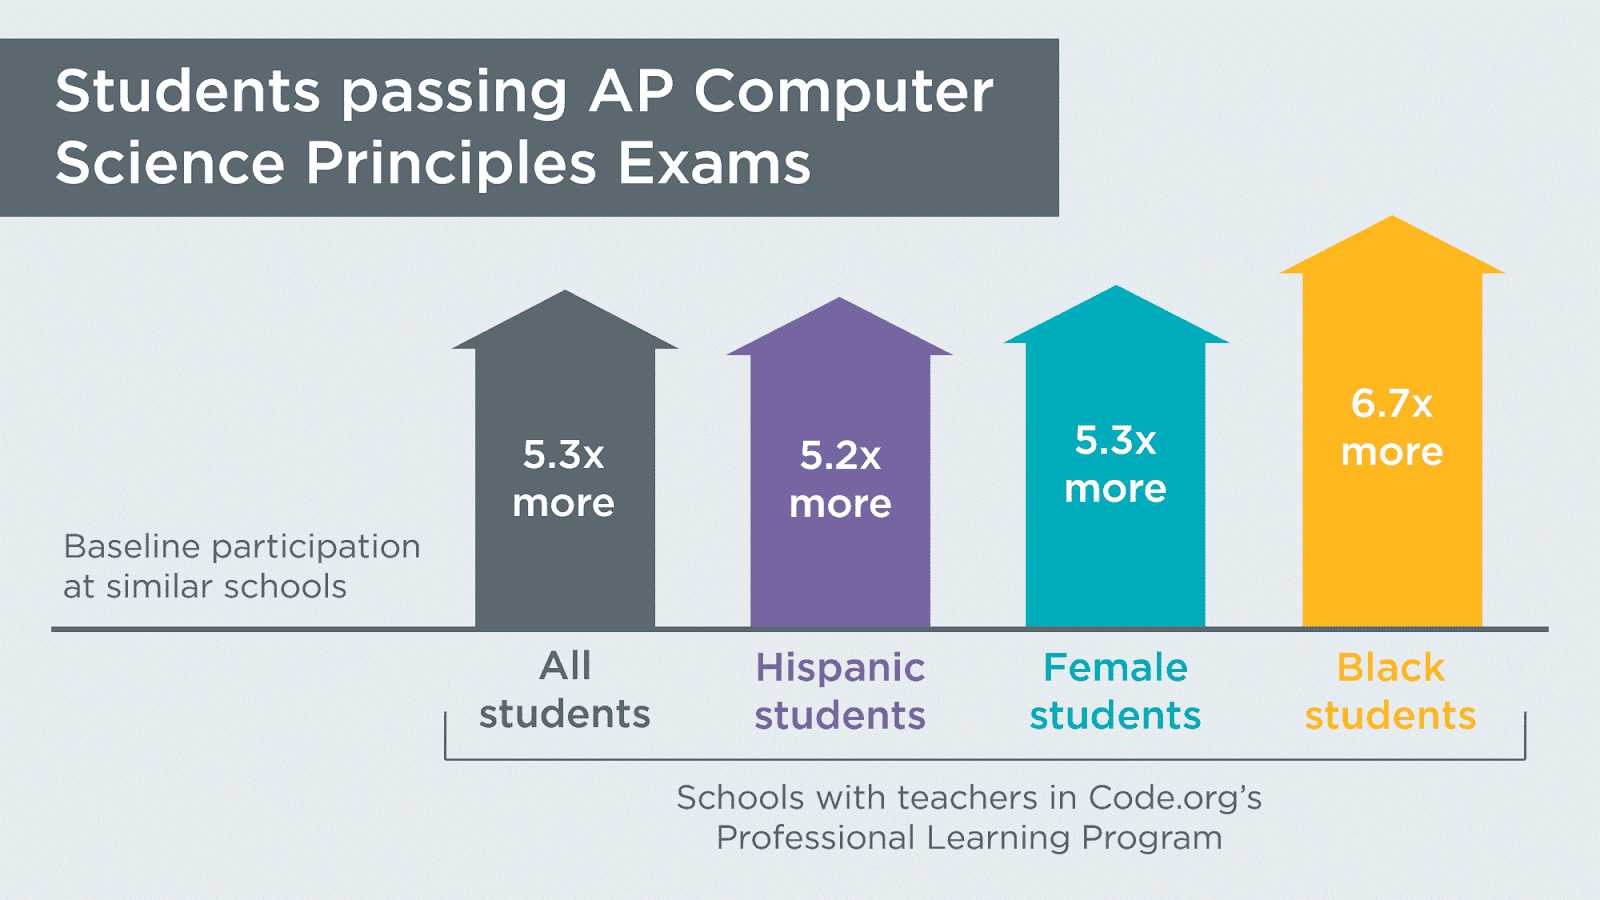 ap computer science principles assignments